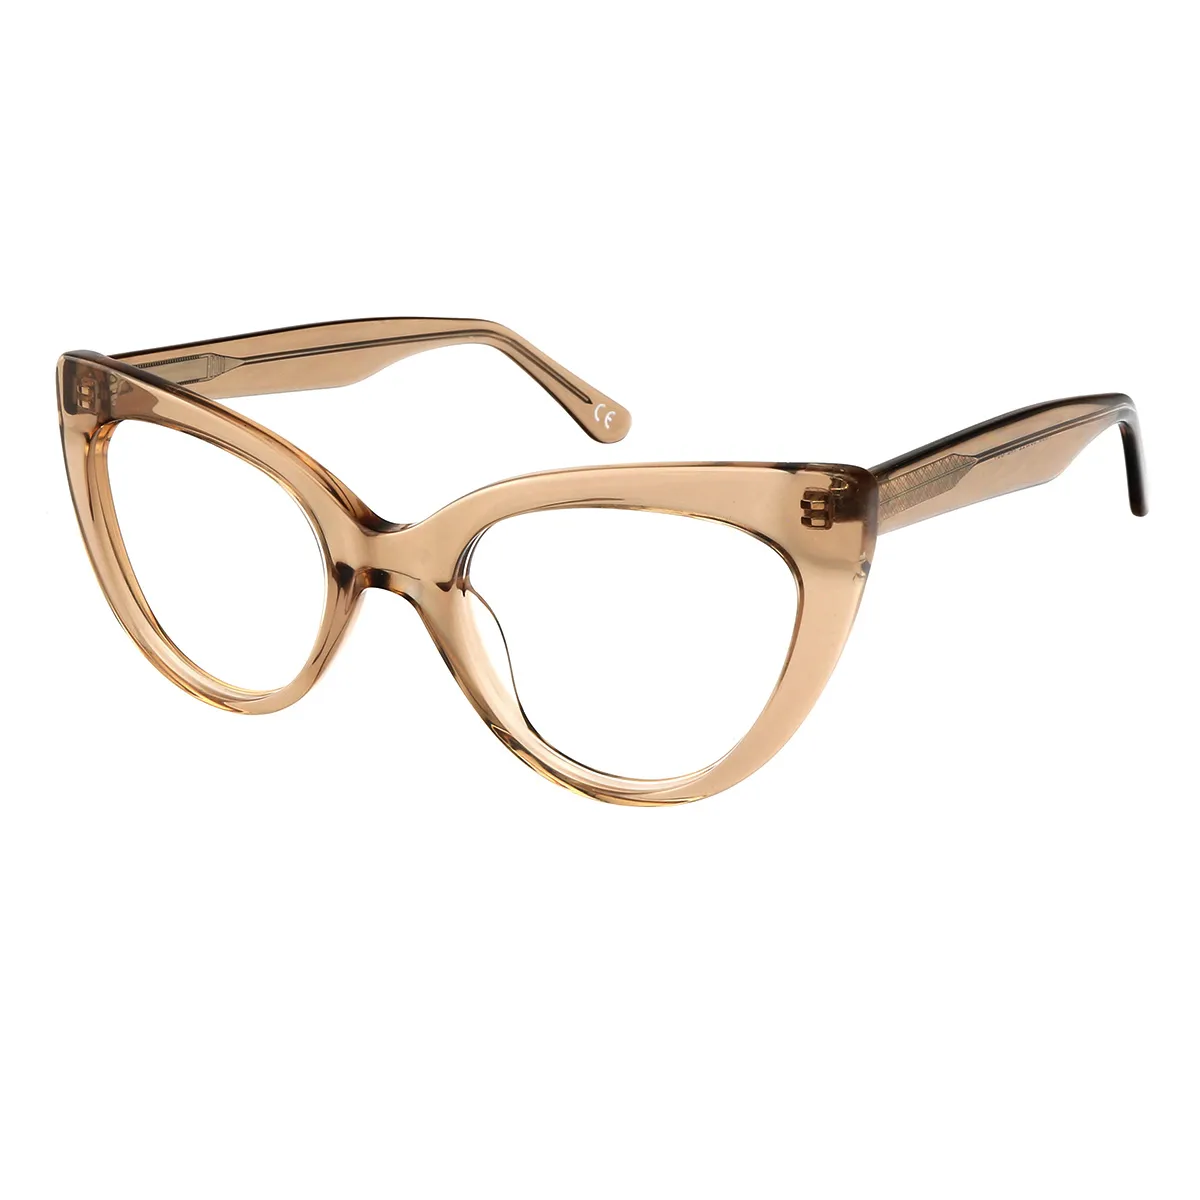 Hepburn - Cat-eye Brown Glasses for Women - EFE